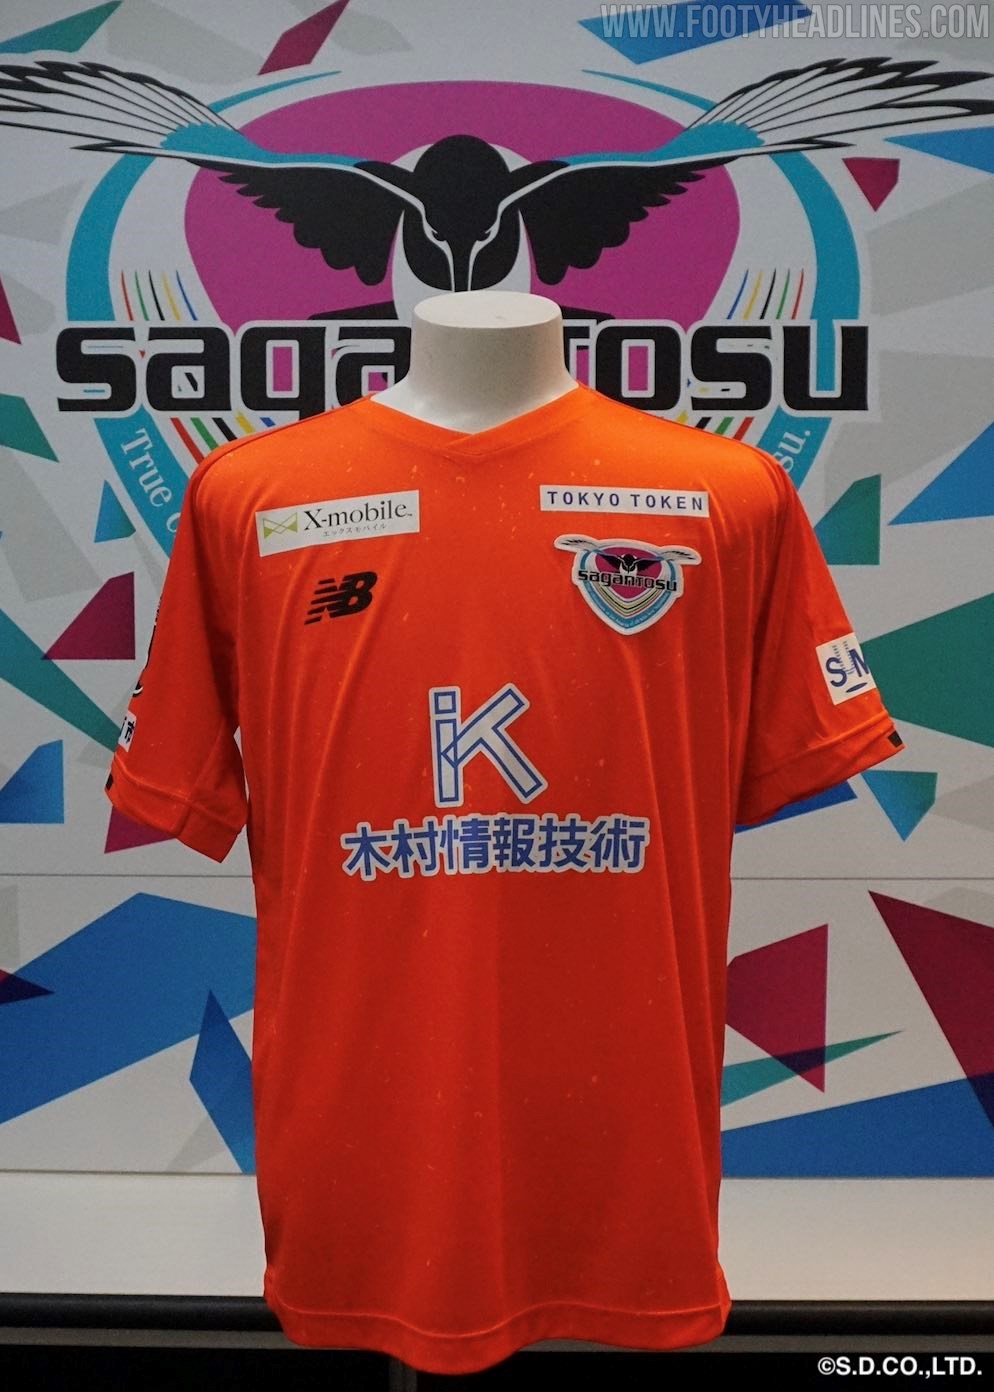 JASMY has become the official sponsor of Sagan Tosu- top football